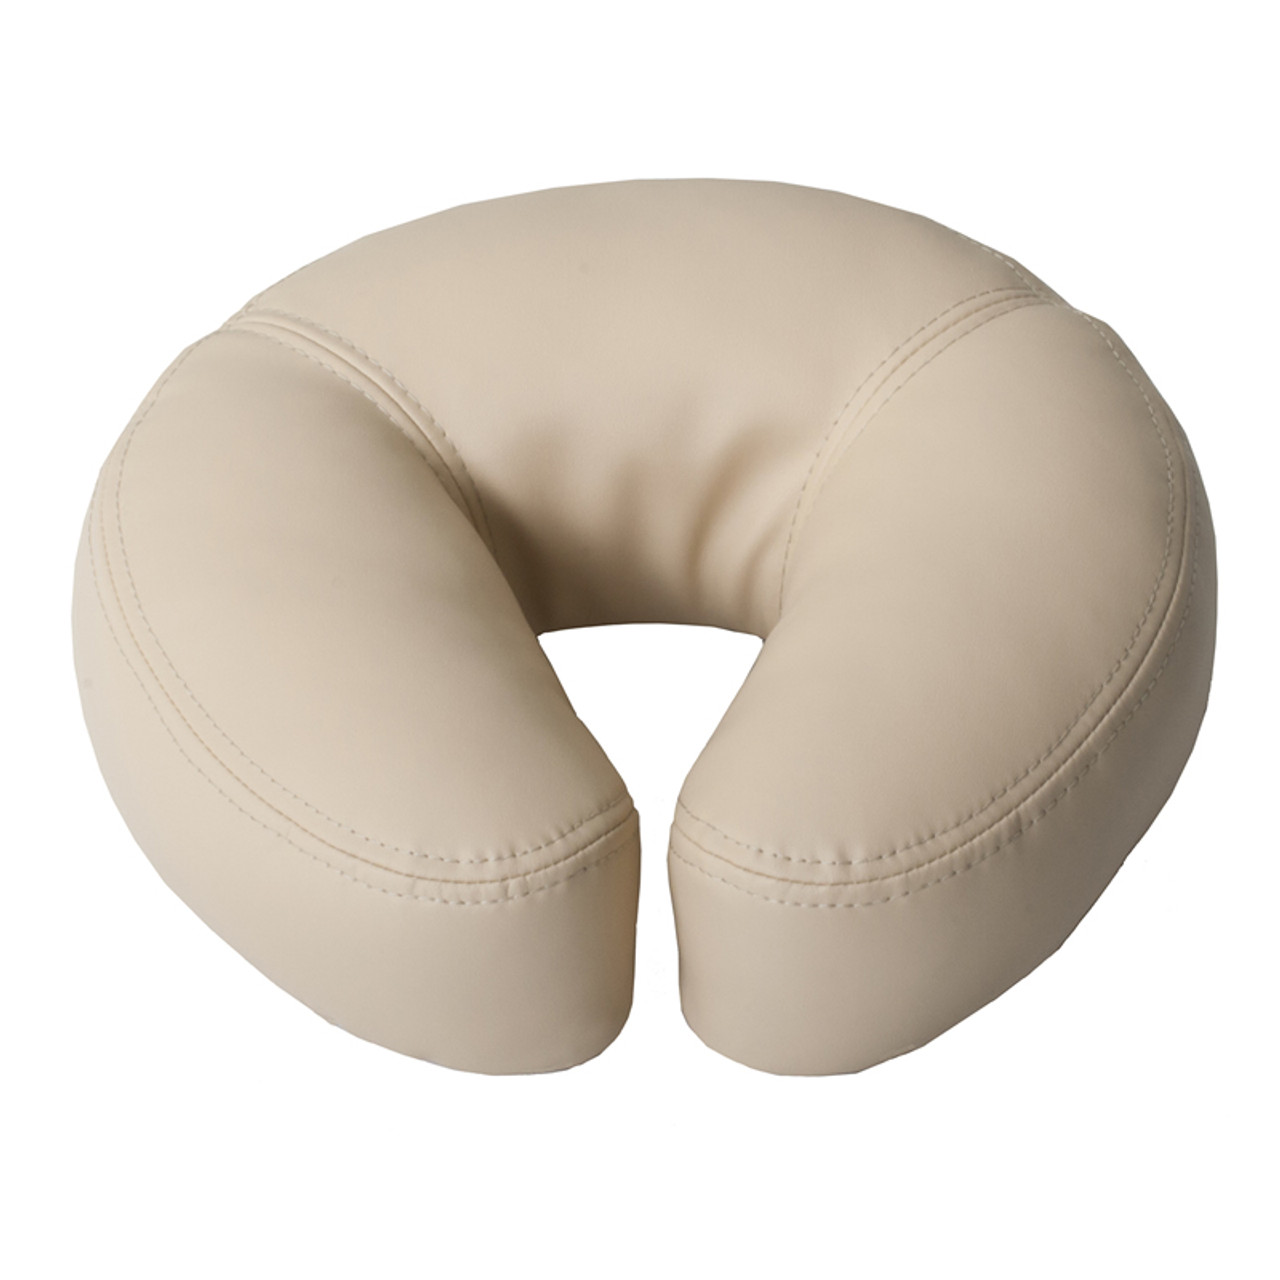 Earthlite Pregnancy Cushion and Headrest